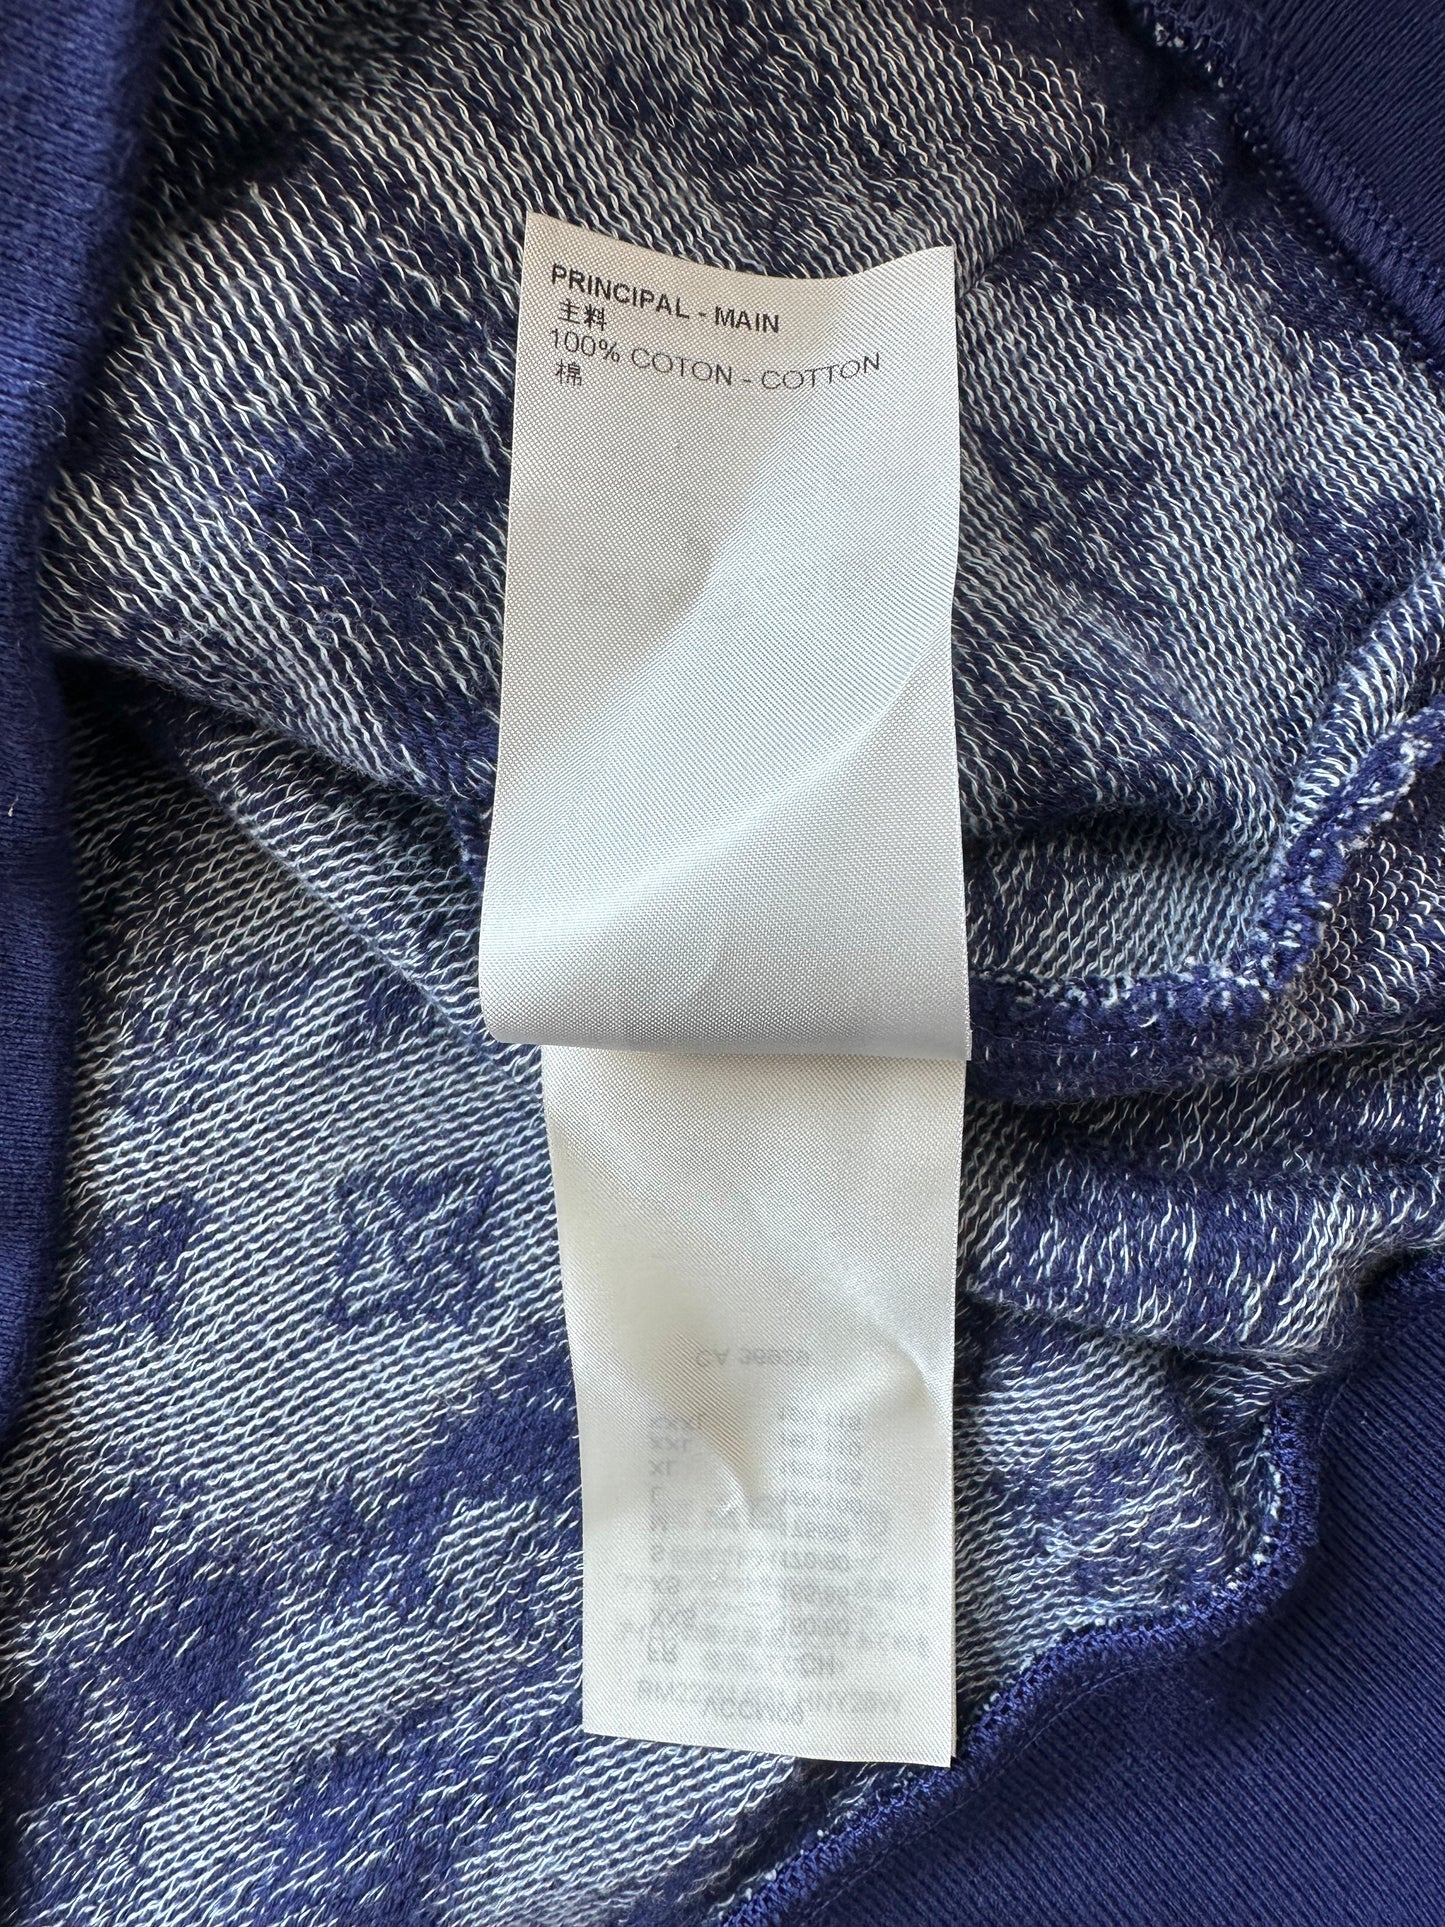 Louis Vuitton Monogram Bandana Short-sleeved Hoodie, Blue, S